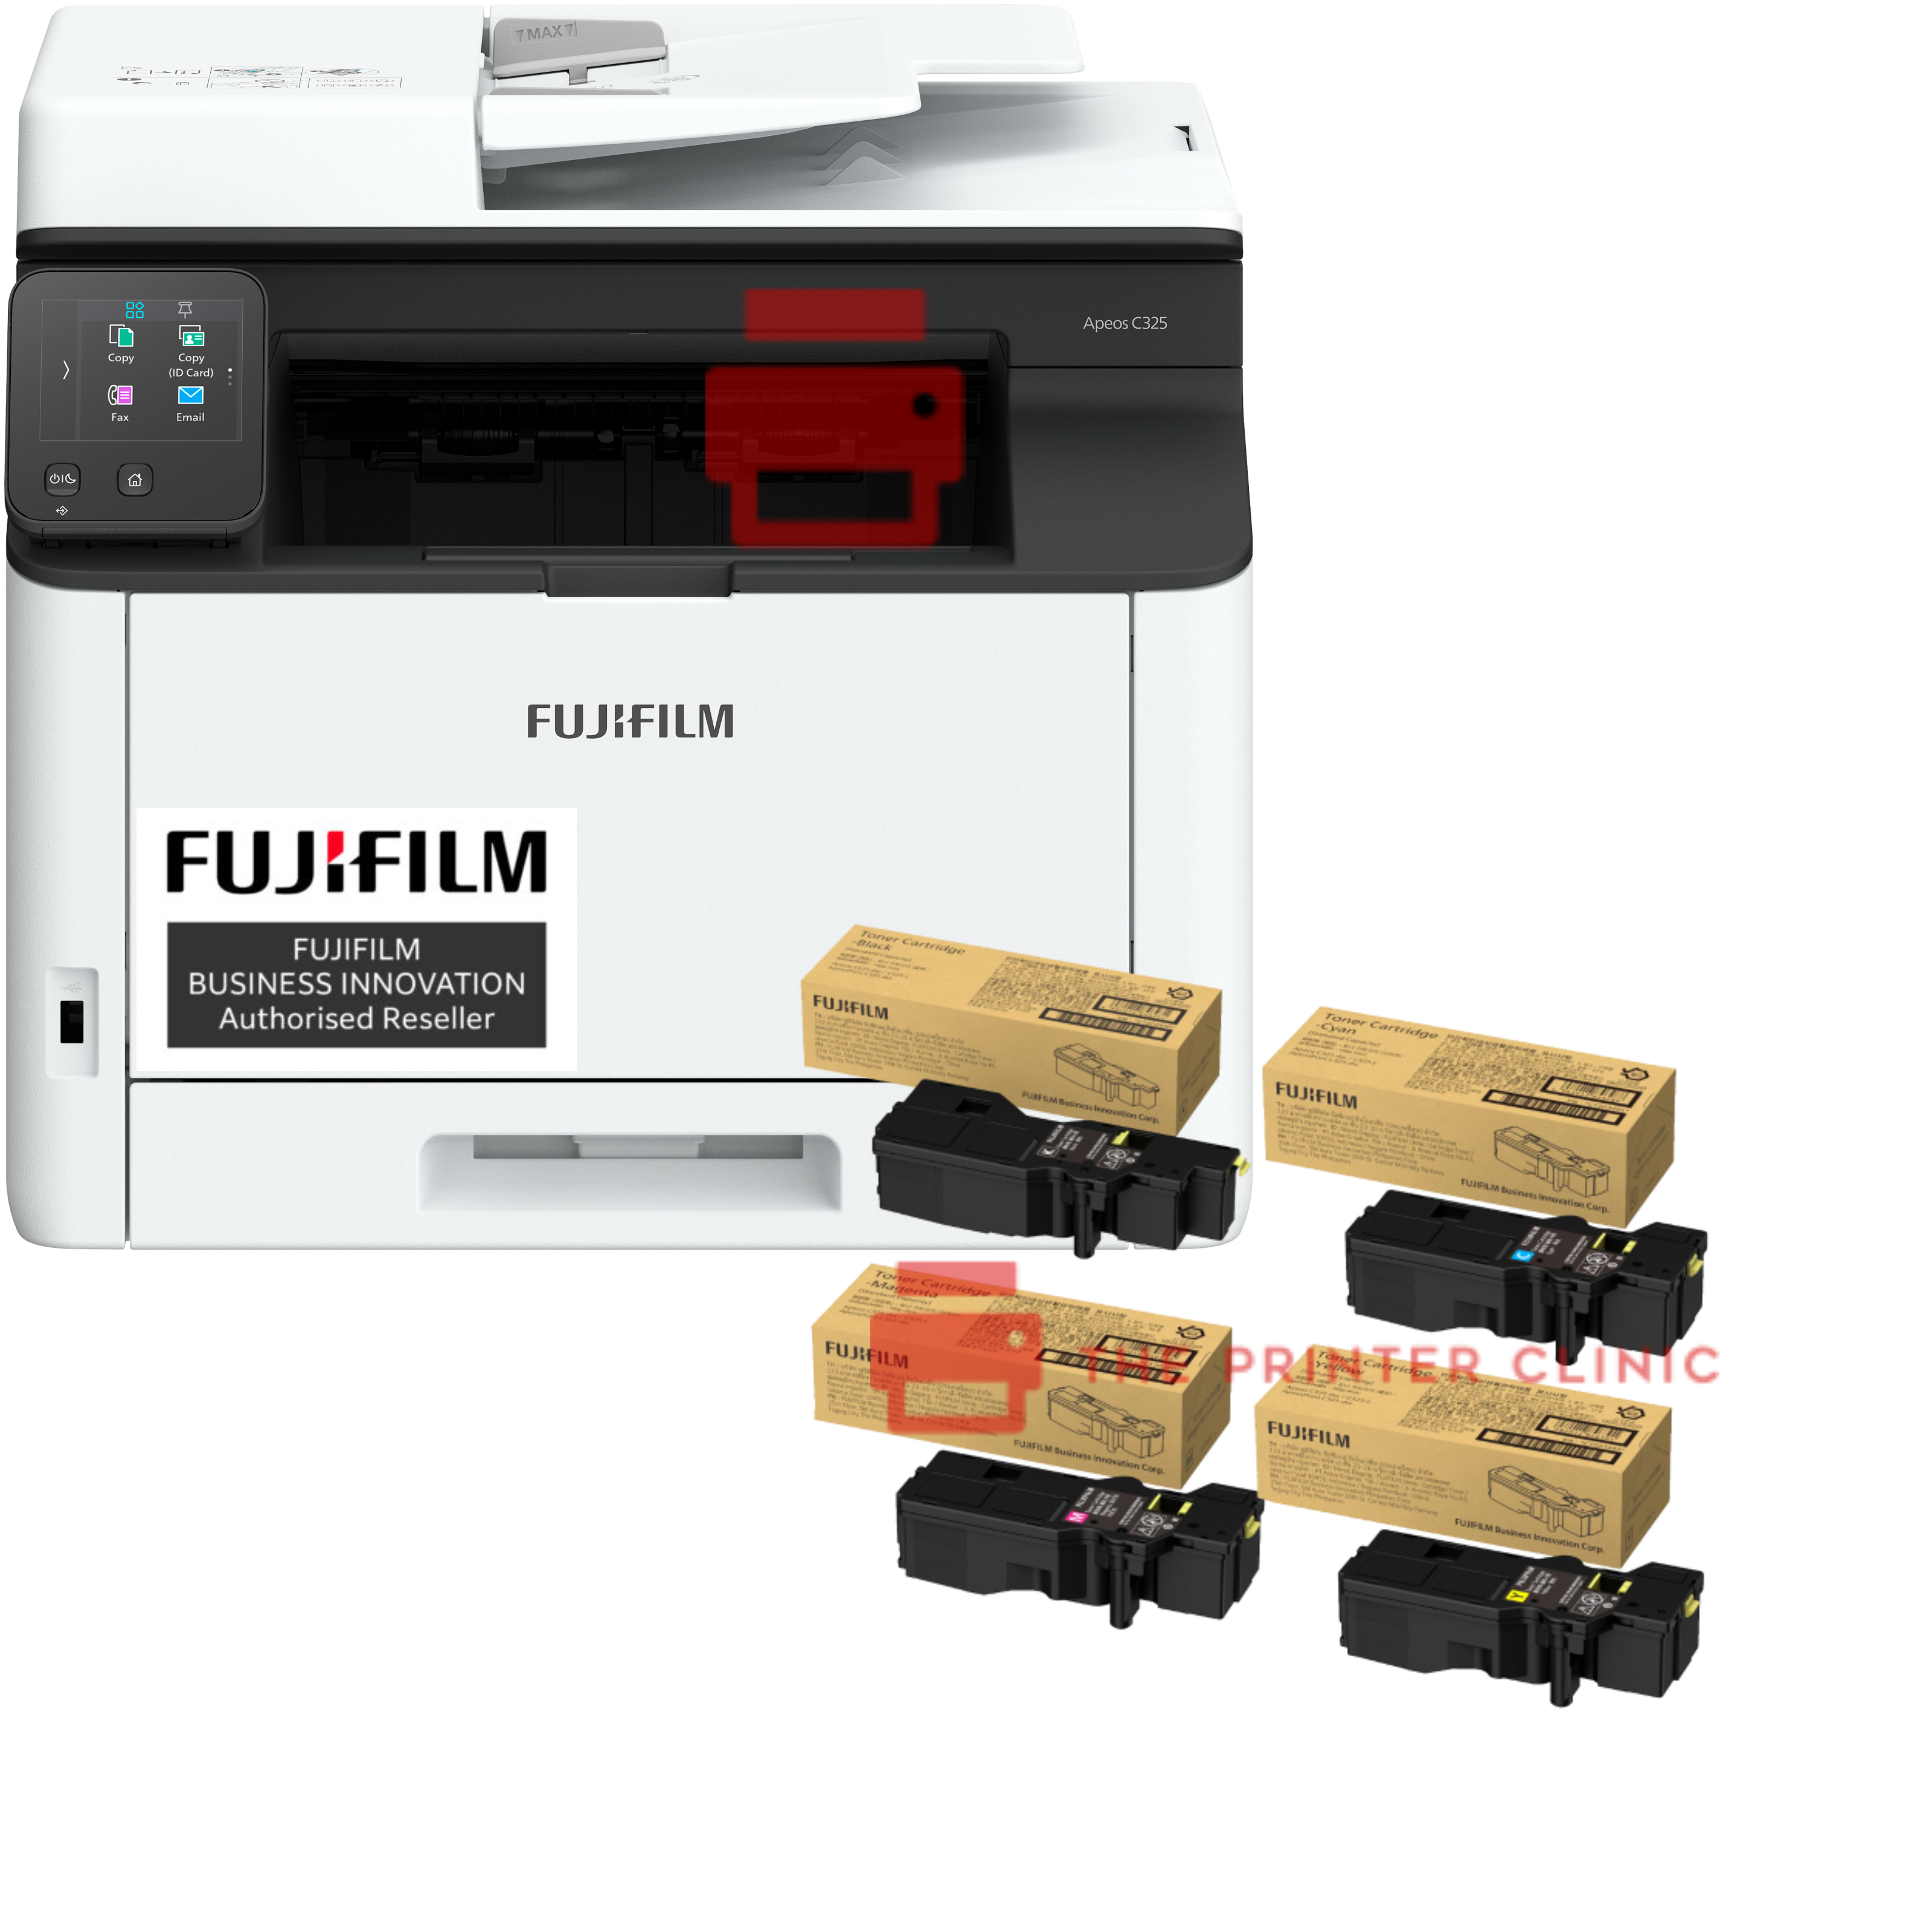 FUJIFILM Apeos C325dw A4 Colour Multifunction Printer Bundled With Extra Set Of Toner